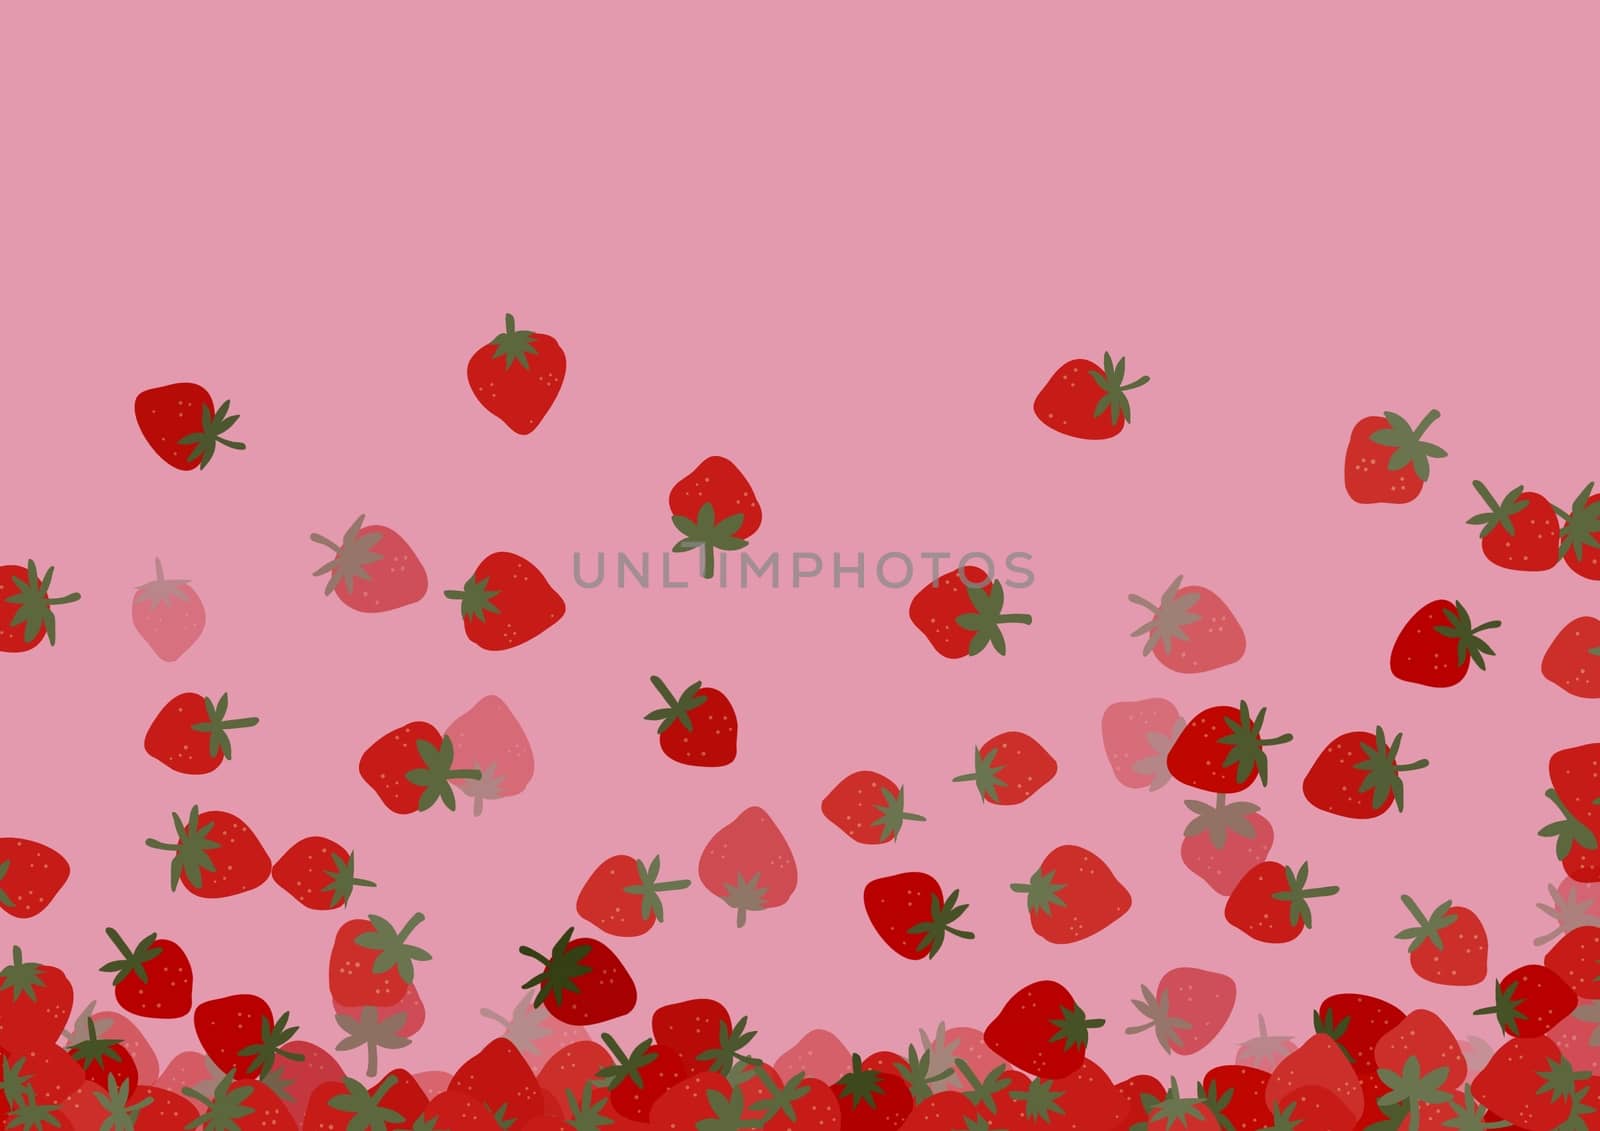 Strawberries background by darrenwhittingham